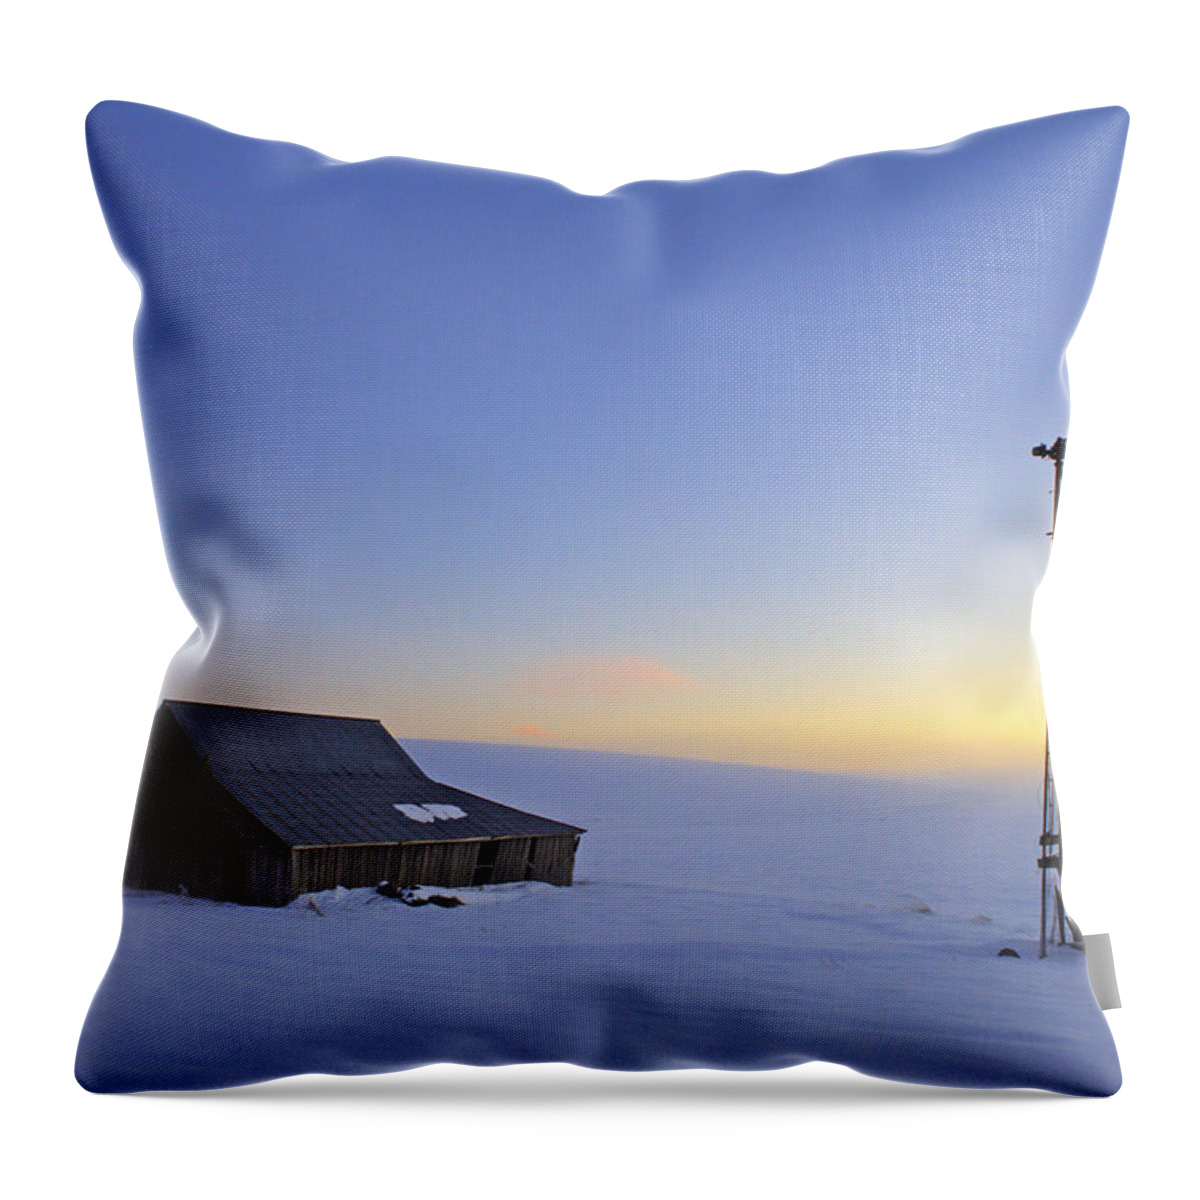 Outdoors Throw Pillow featuring the photograph Winter Sunset by Doug Davidson